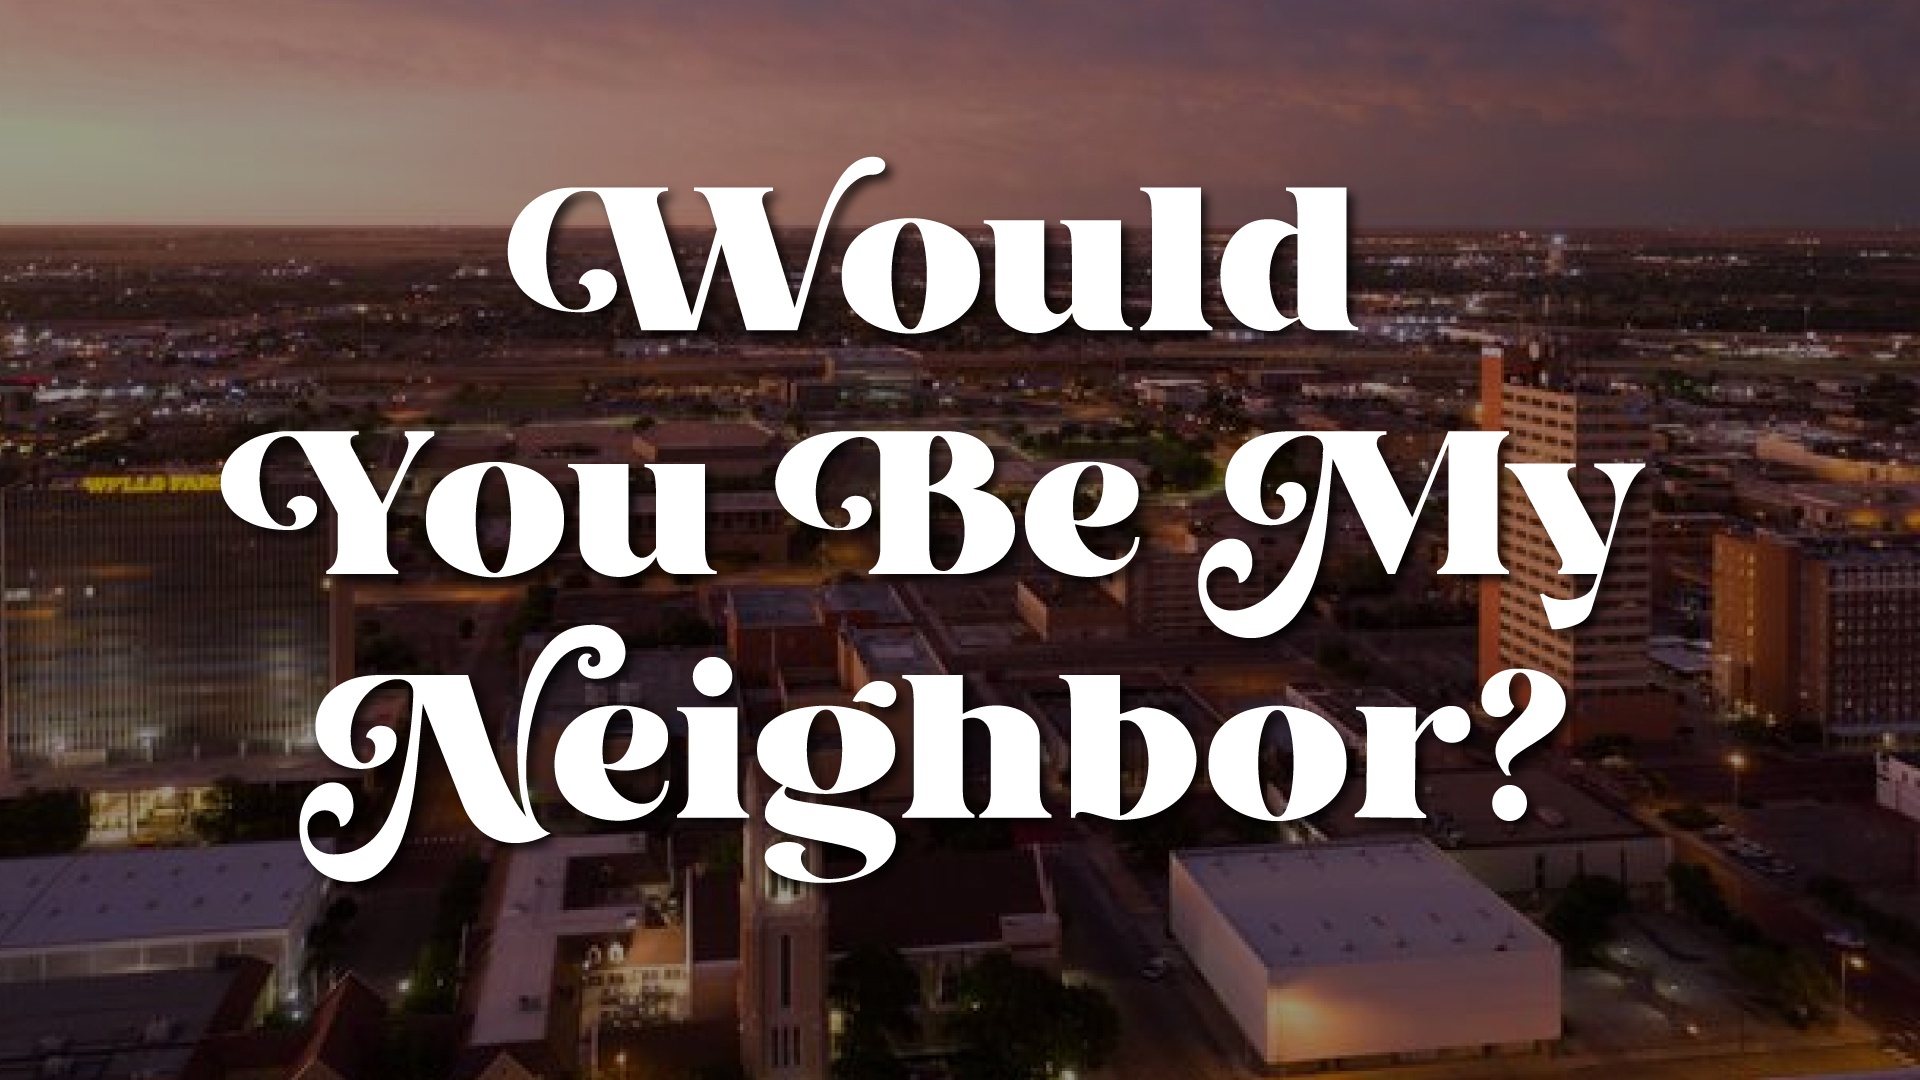 Jesus Call Us To Be A Neighbor